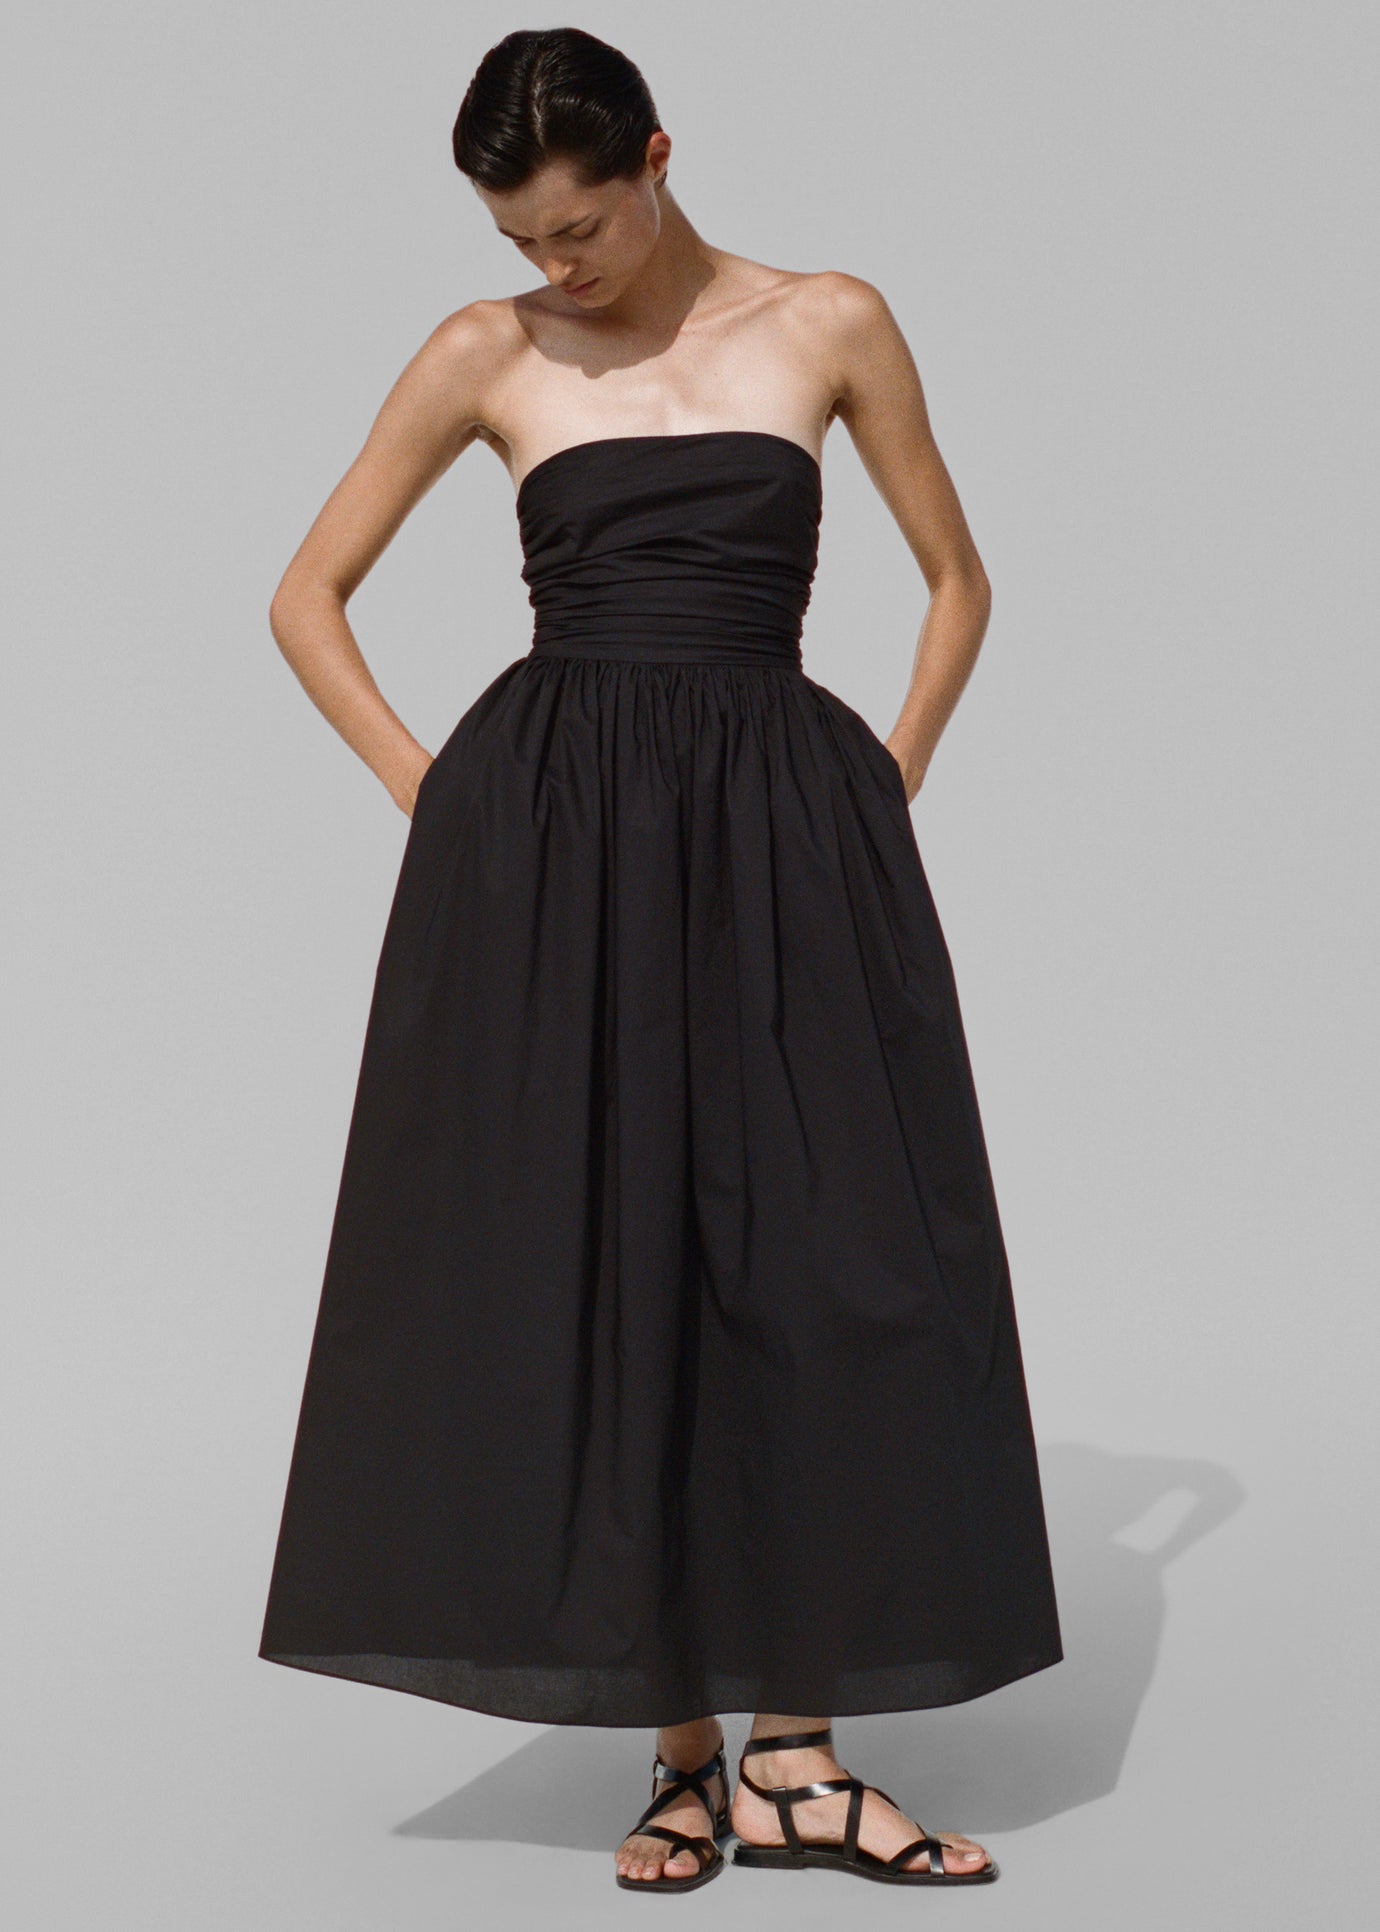 Matteau Strapless Lace Up Dress - Black - 1